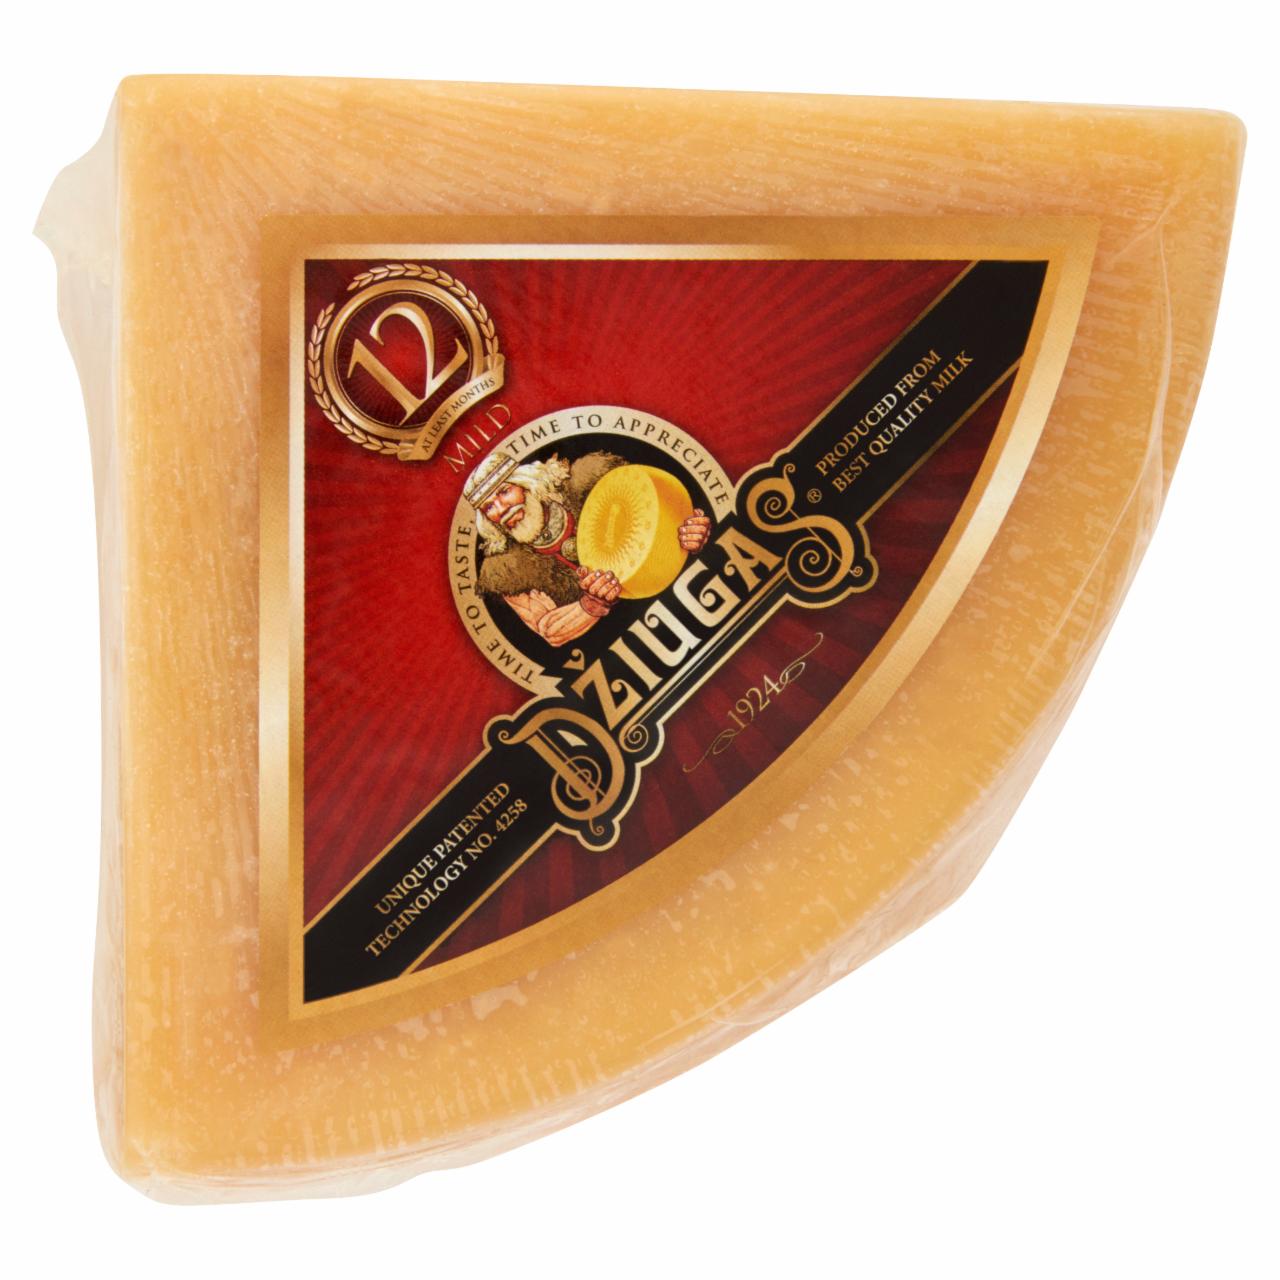 Képek - Džiugas darabolt kemény sajt